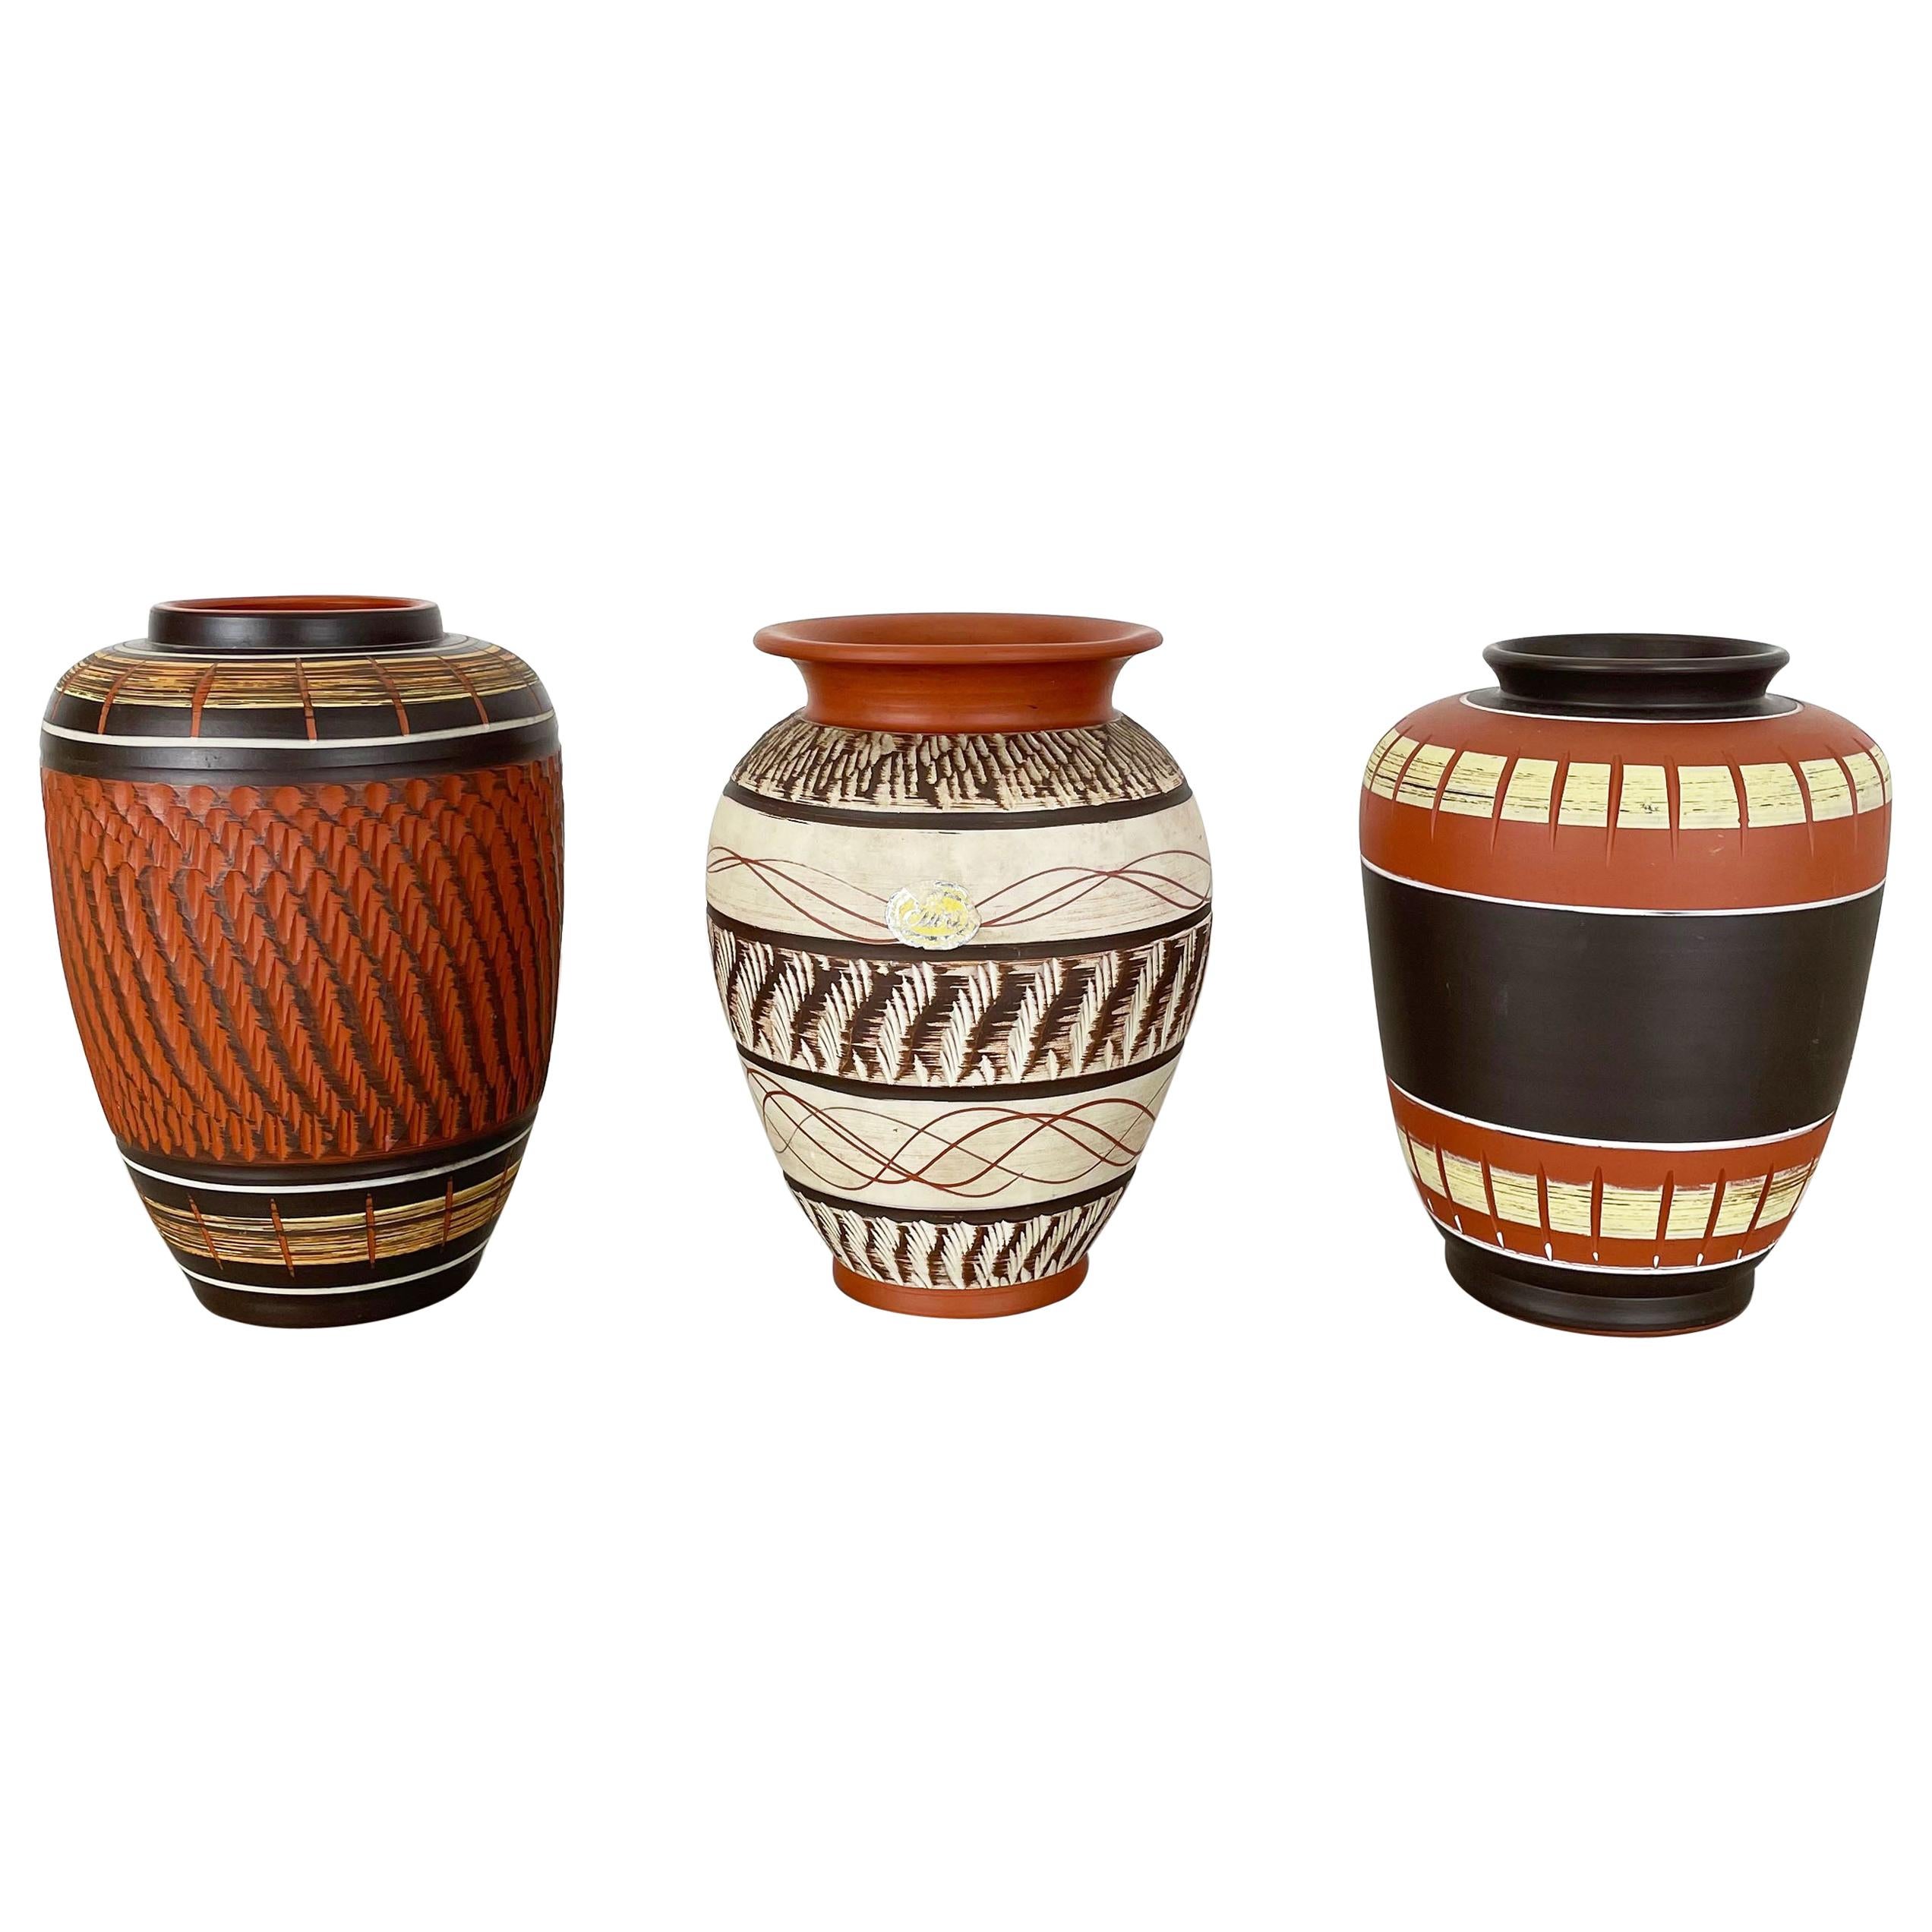 Set of 3 Abstract Ceramic Pottery Vases by EIWA / AKRU Ceramics, Germany, 1950s